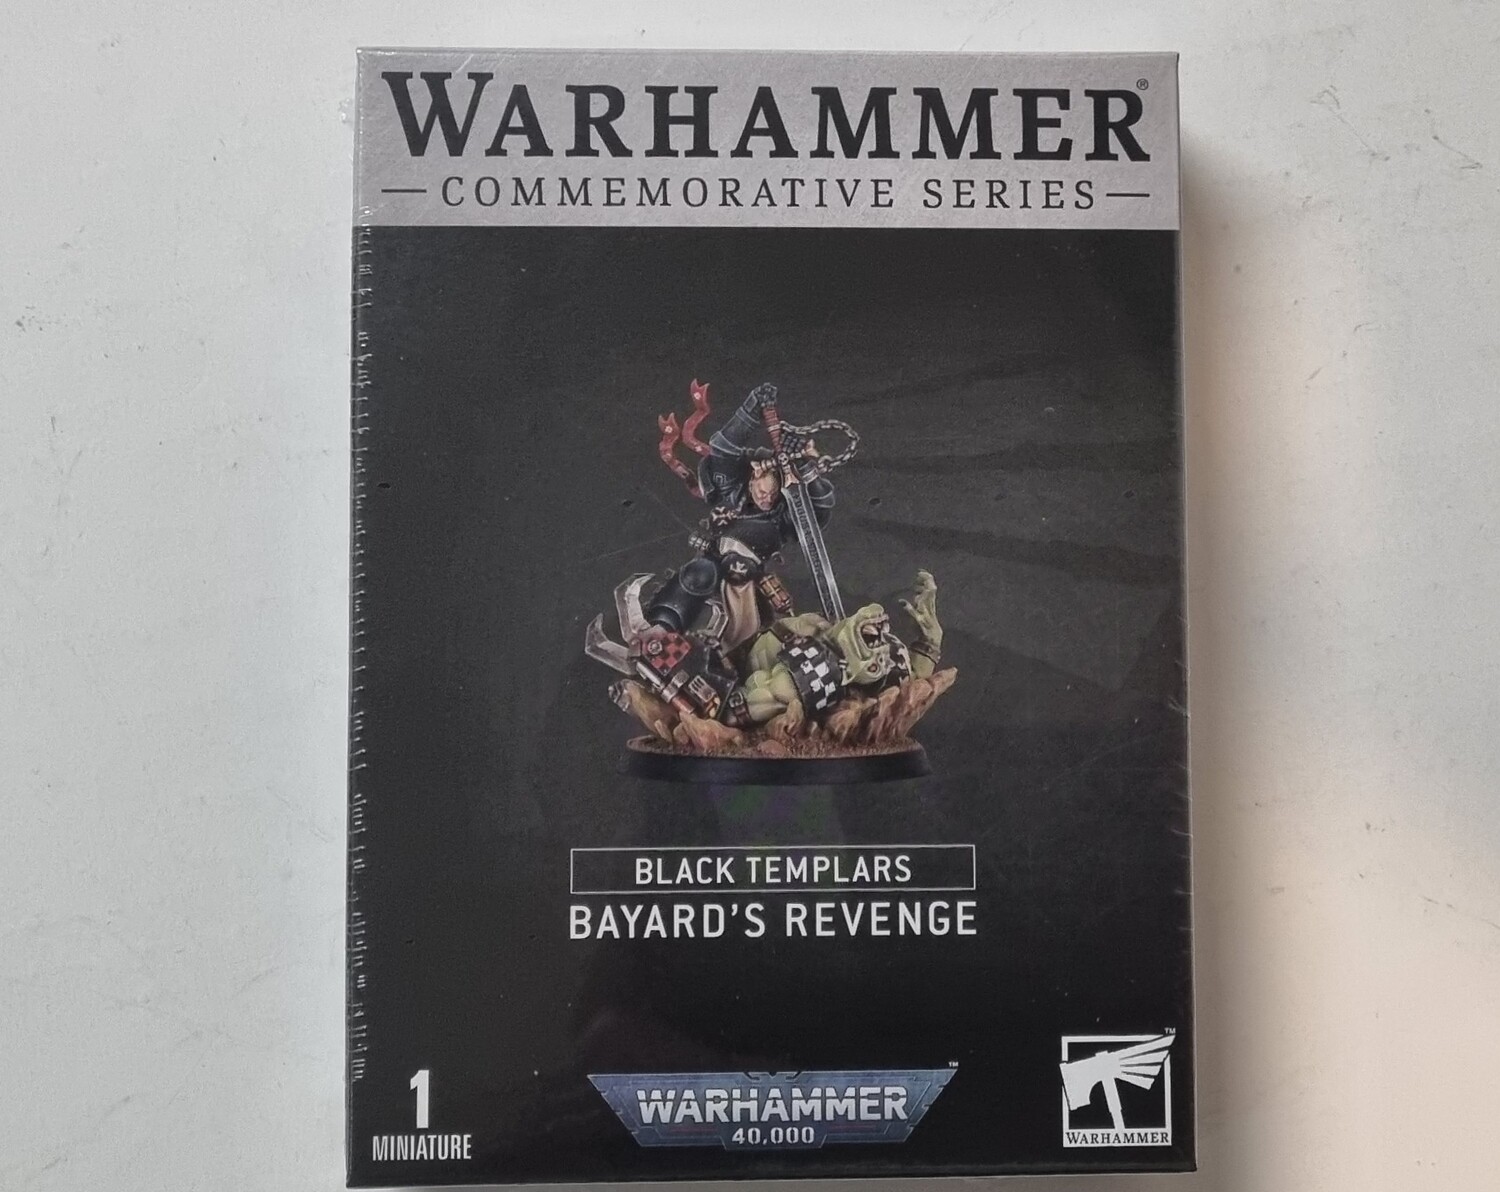 Warhammer 40k, Black Templars: Bayard's Revenge, Commemorative Series